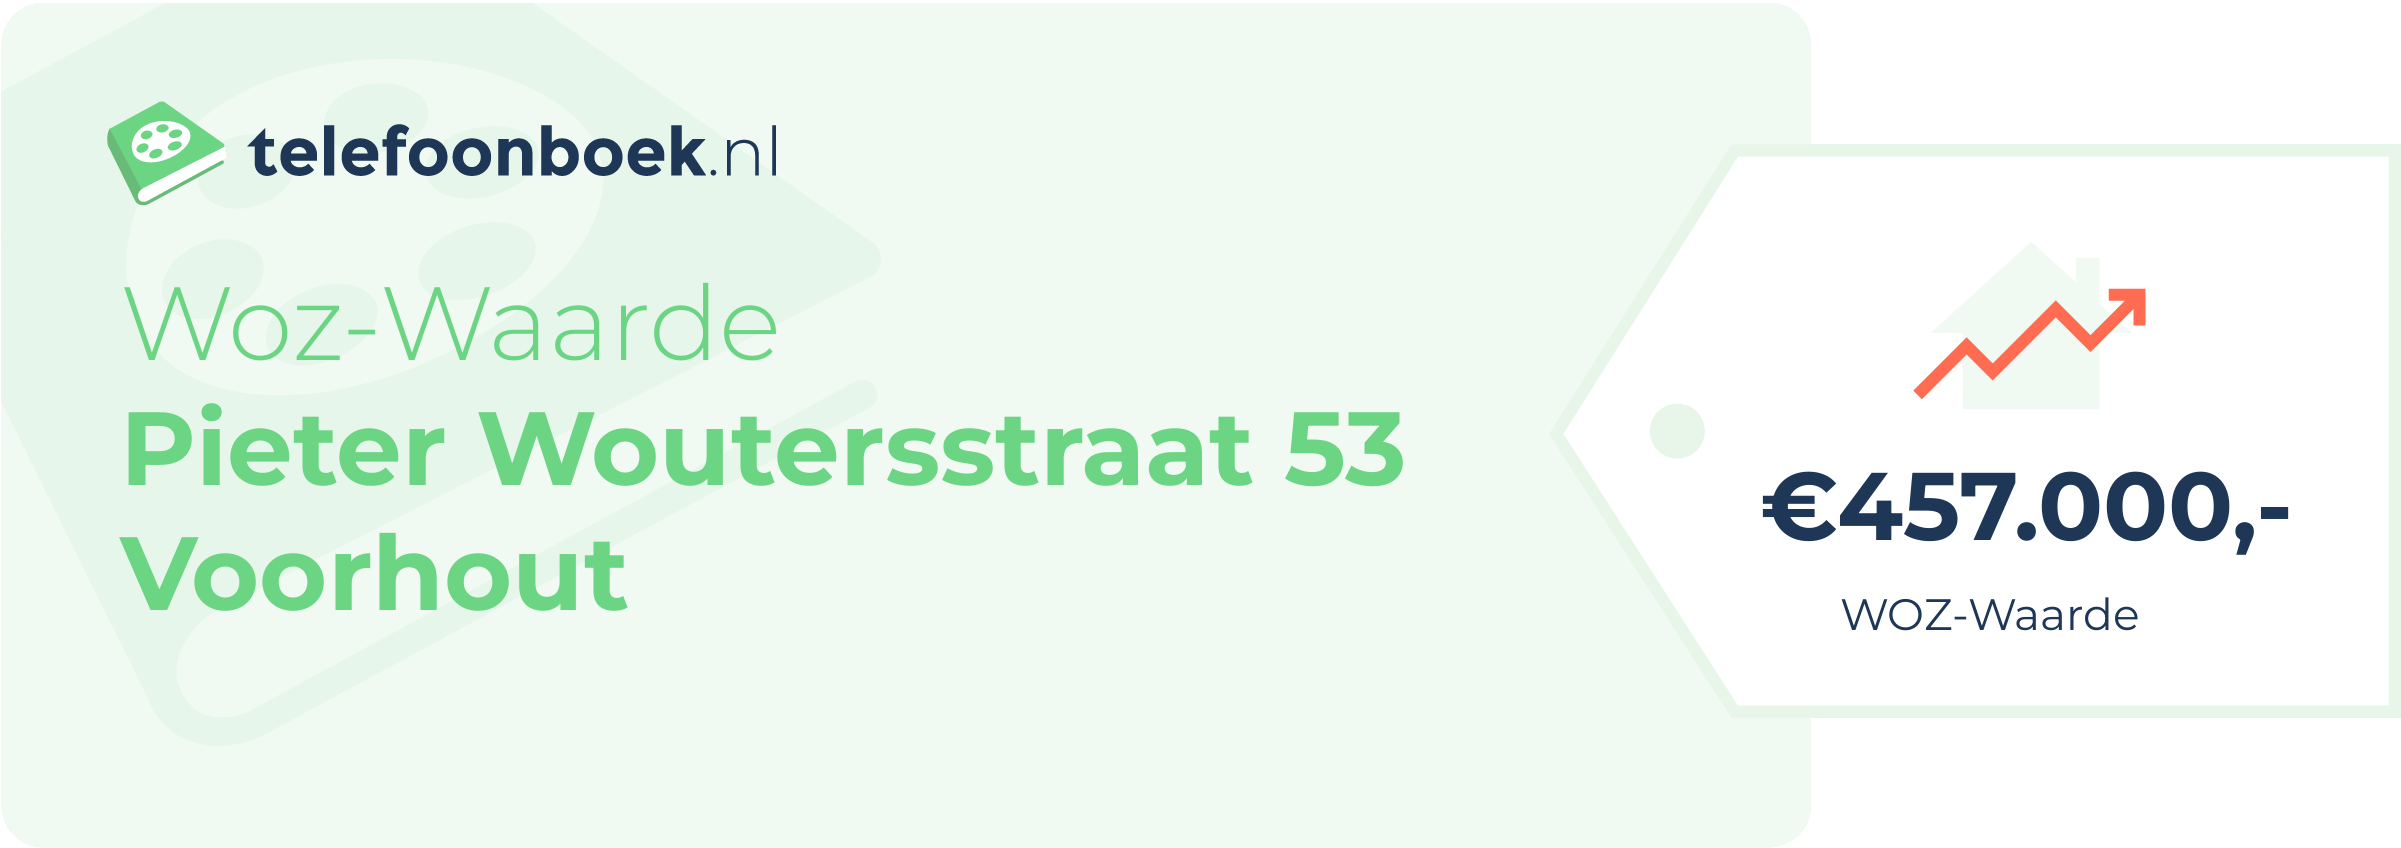 WOZ-waarde Pieter Woutersstraat 53 Voorhout